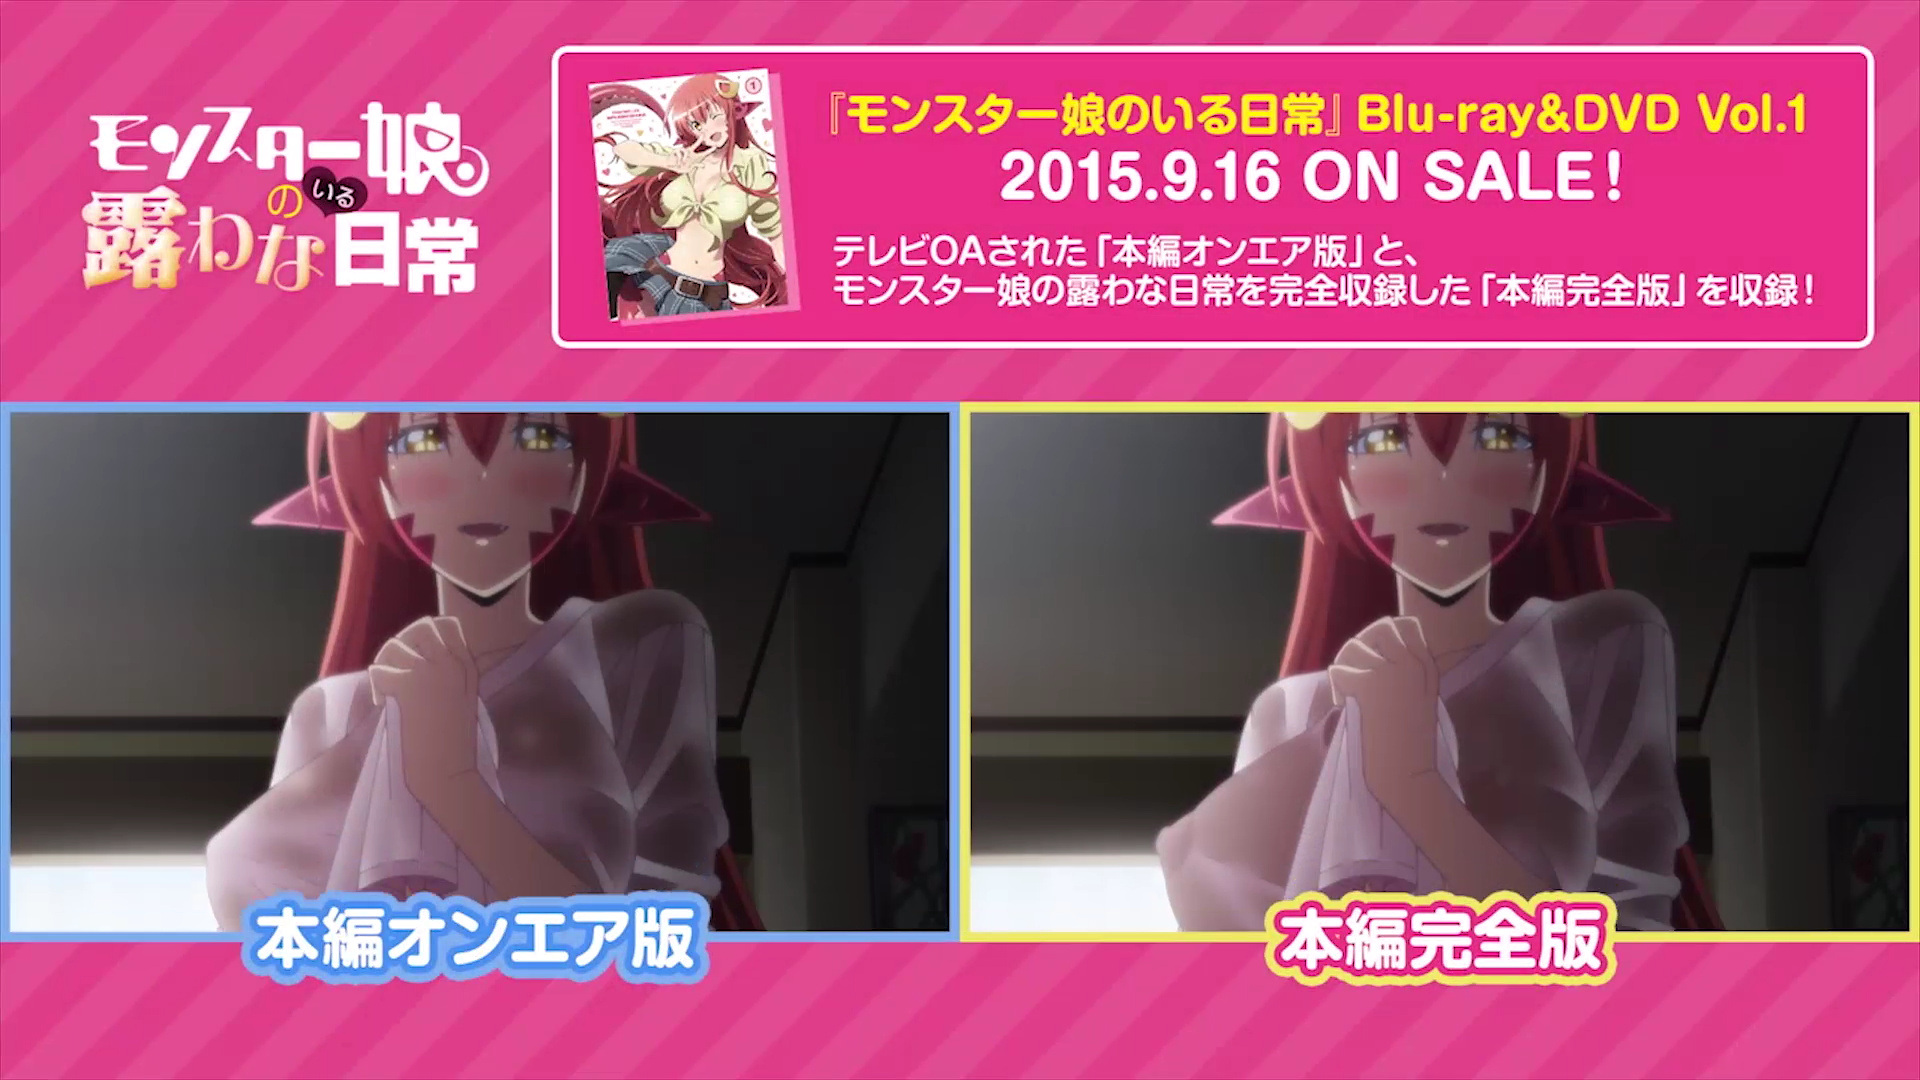 TV vs Blu-Ray Monster Musume anime blu-ray volume 1 uncensored 1